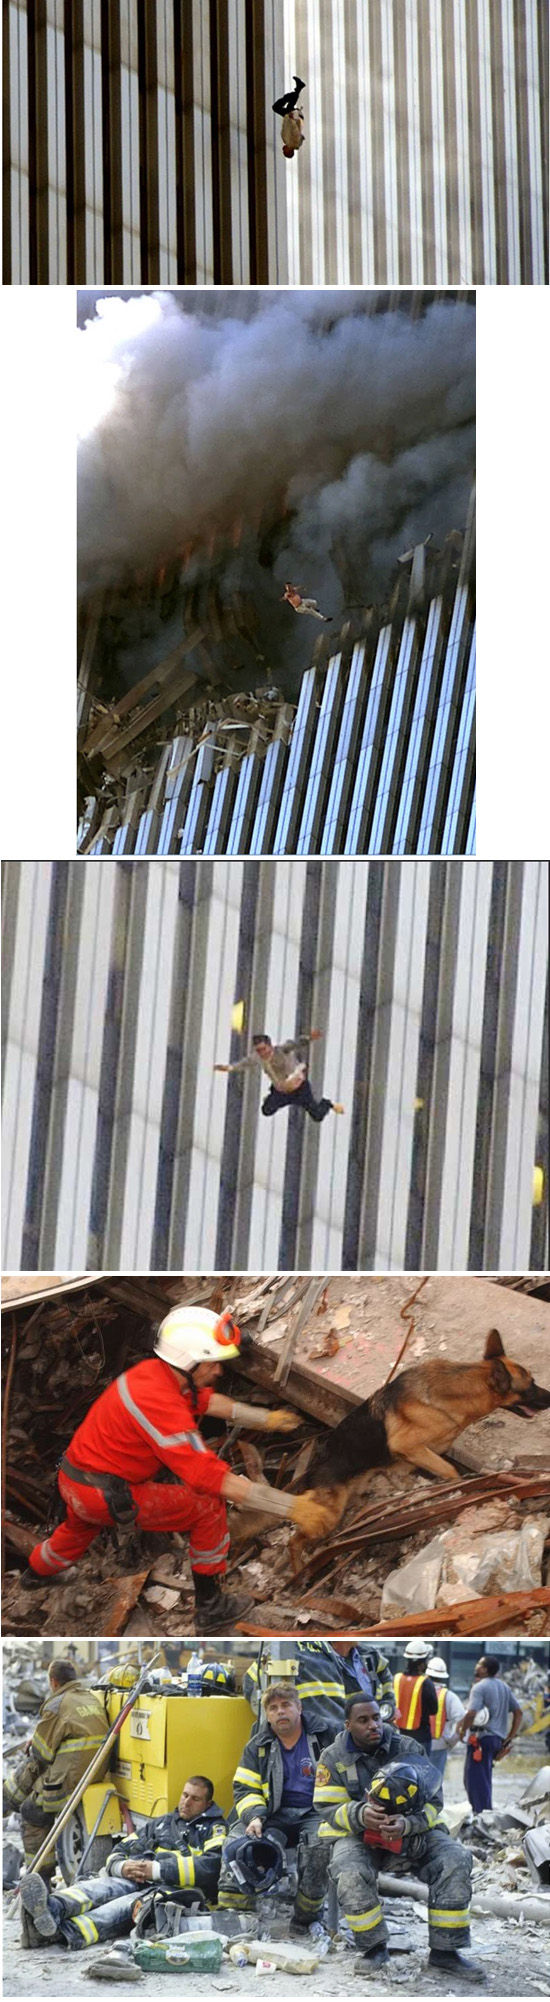 September 11, 2001 - photos 2